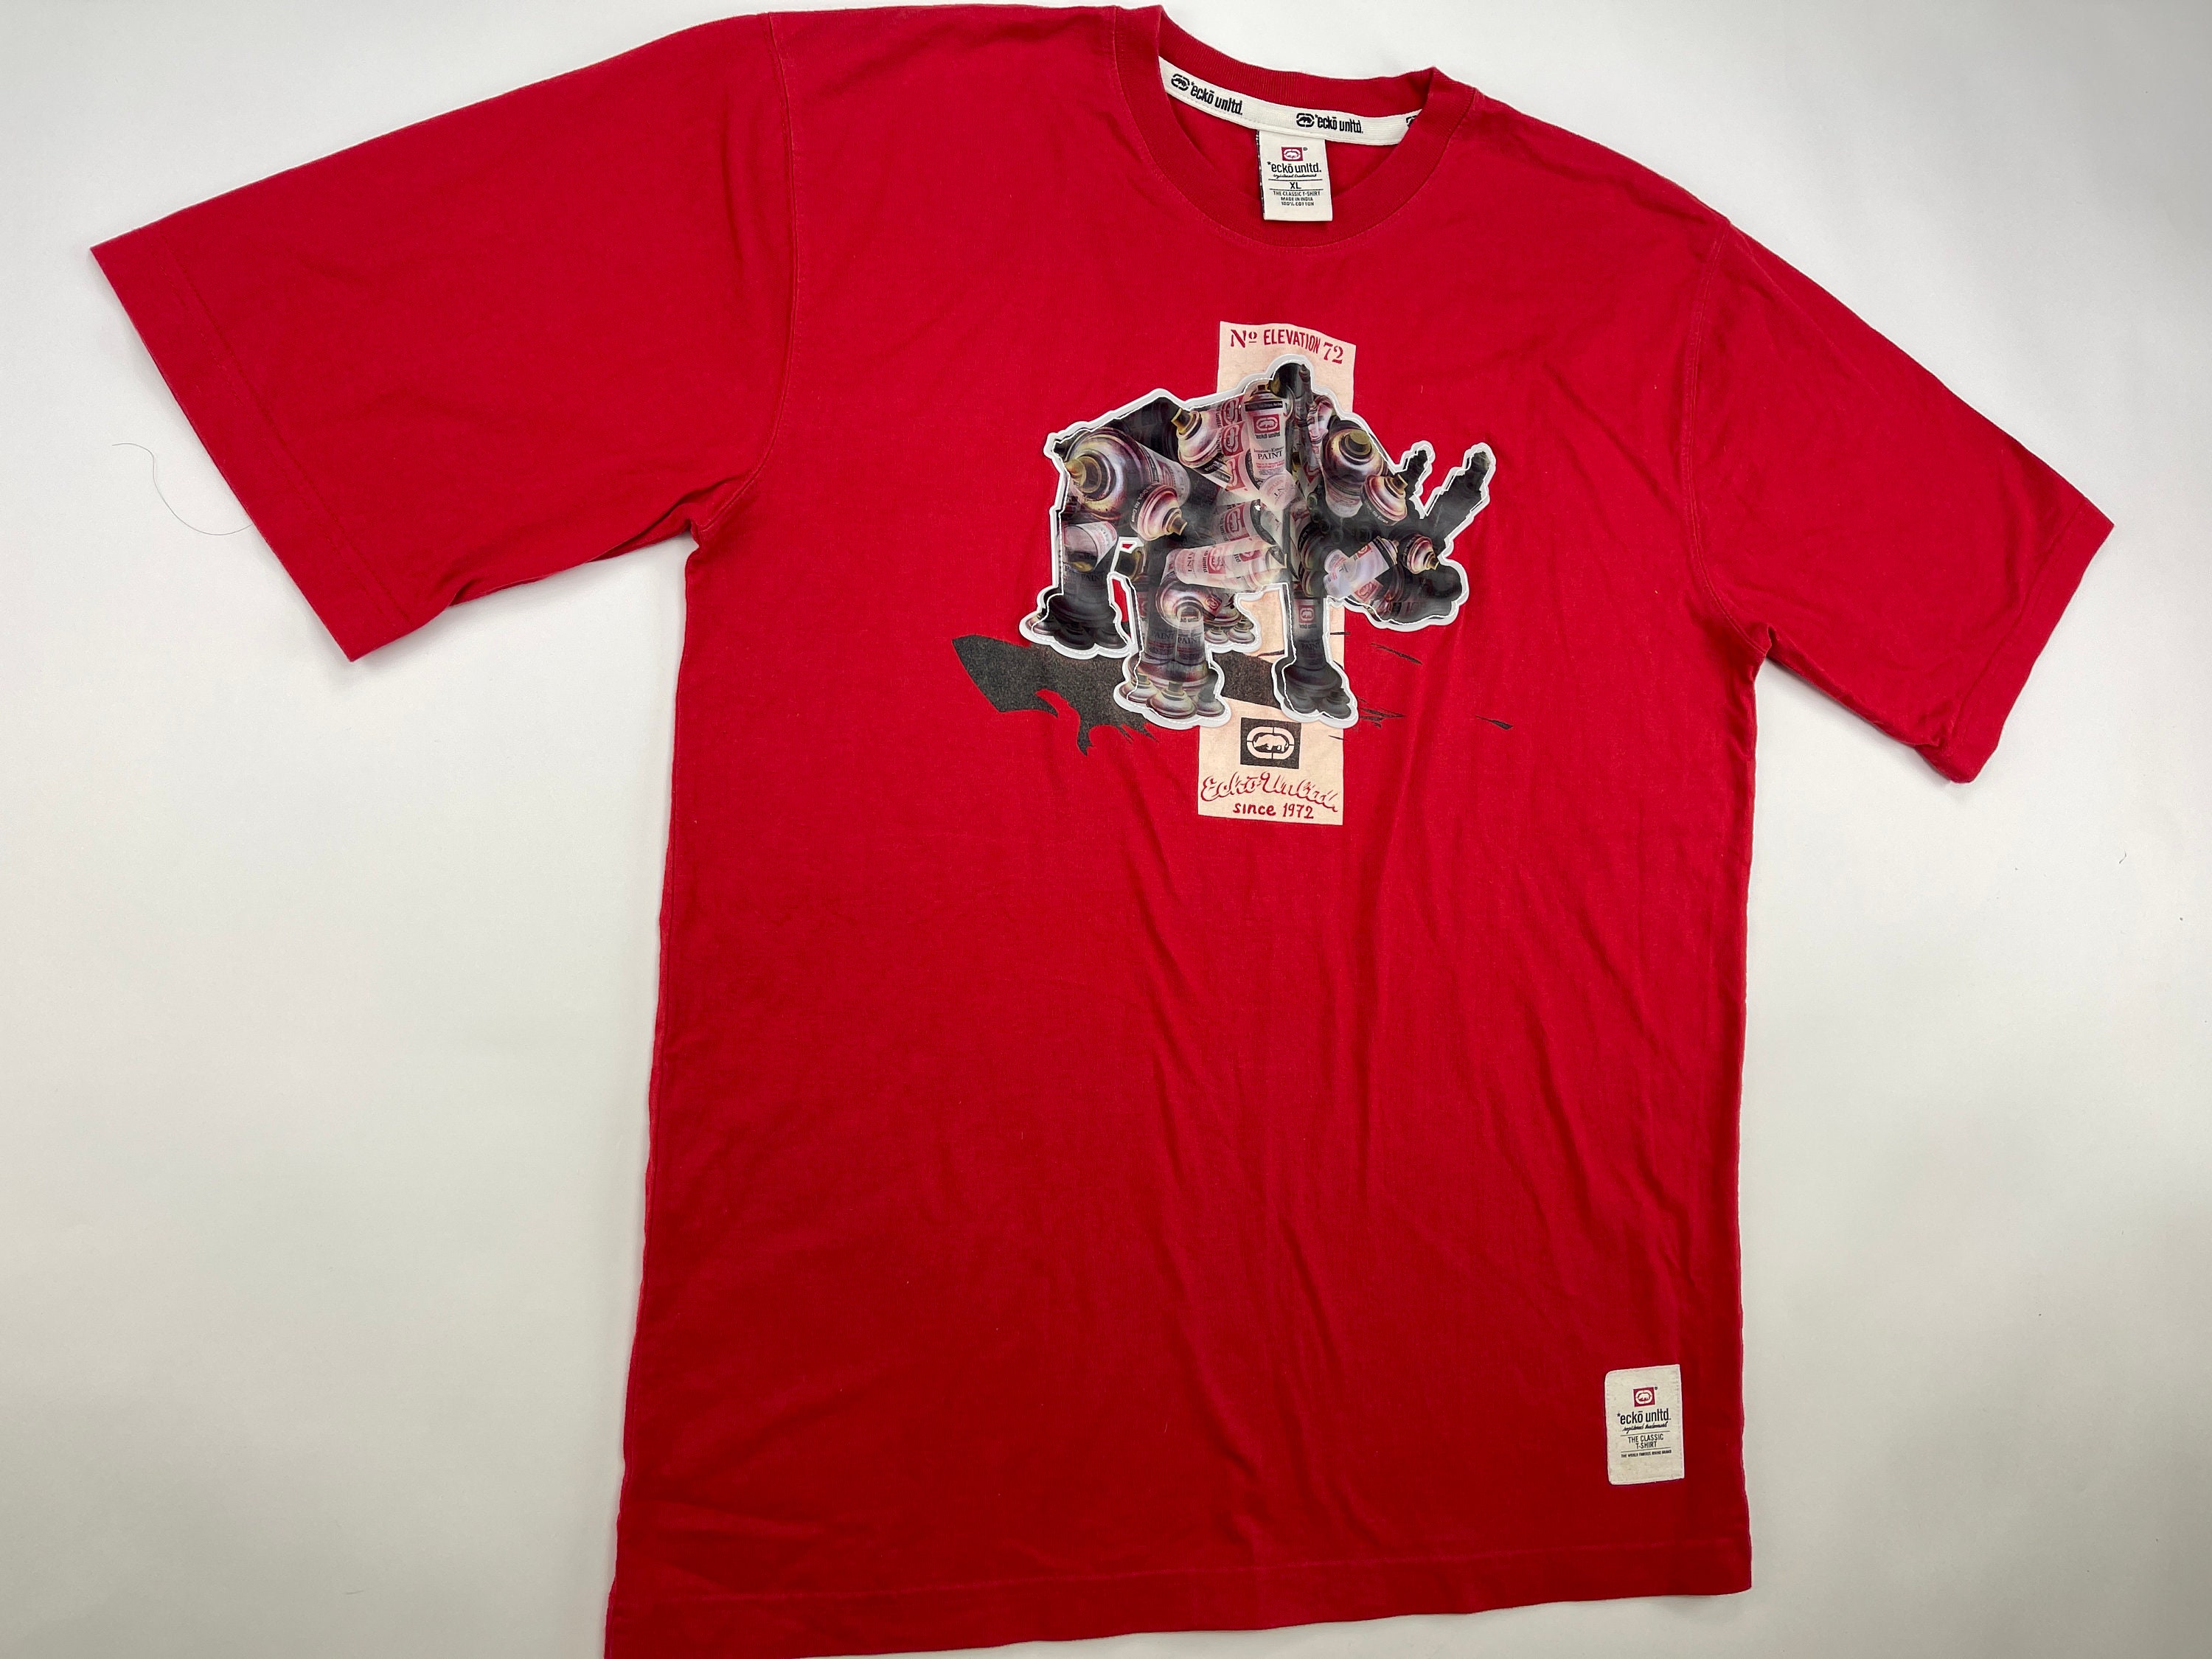 ECKO UNLTD T-shirt Red Vintage Shirt 90s Hip Hop Clothing - Etsy UK